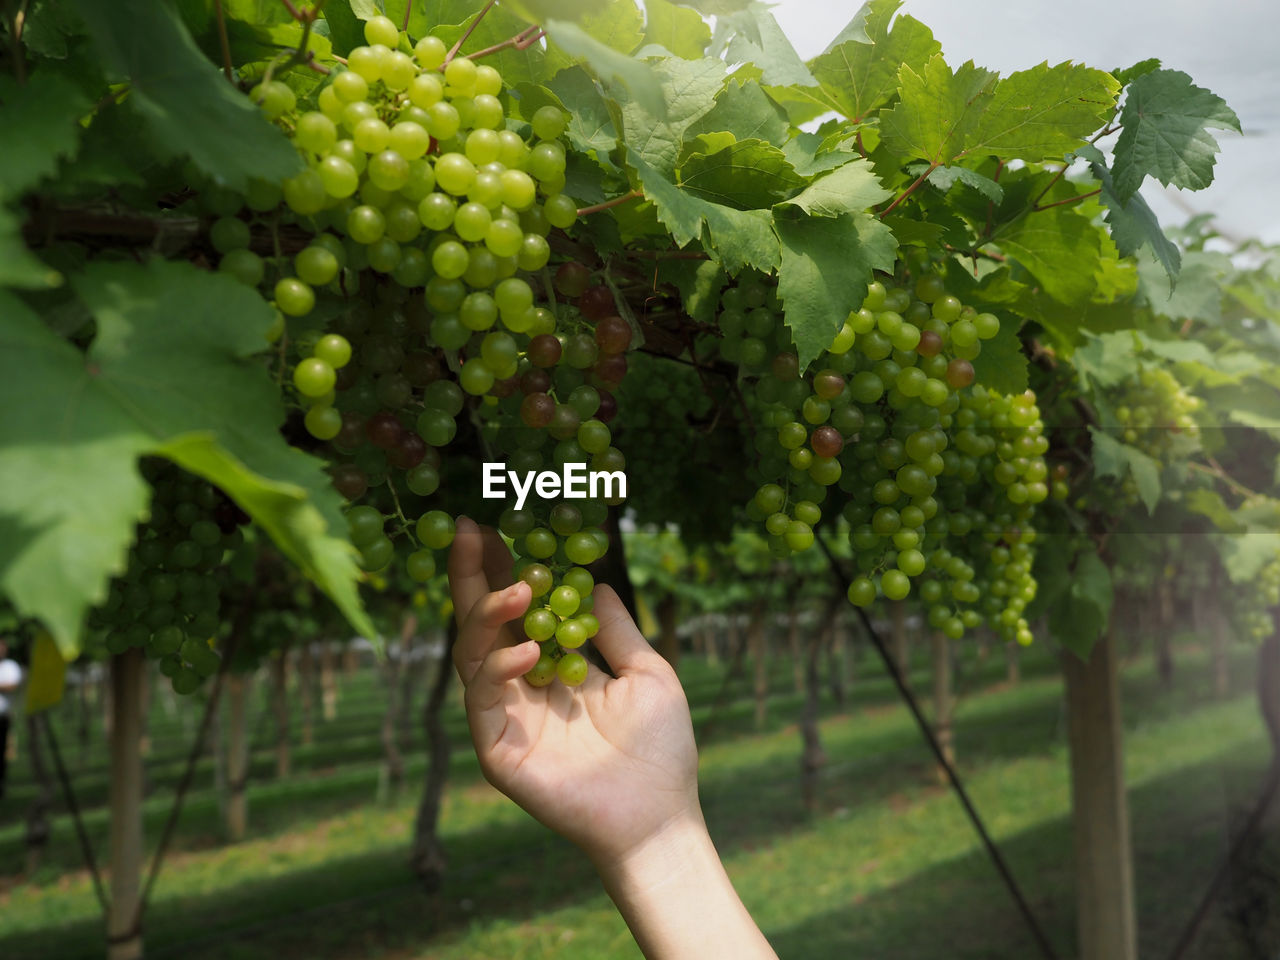 Closeup of woman hand touching the green grape in the open field.